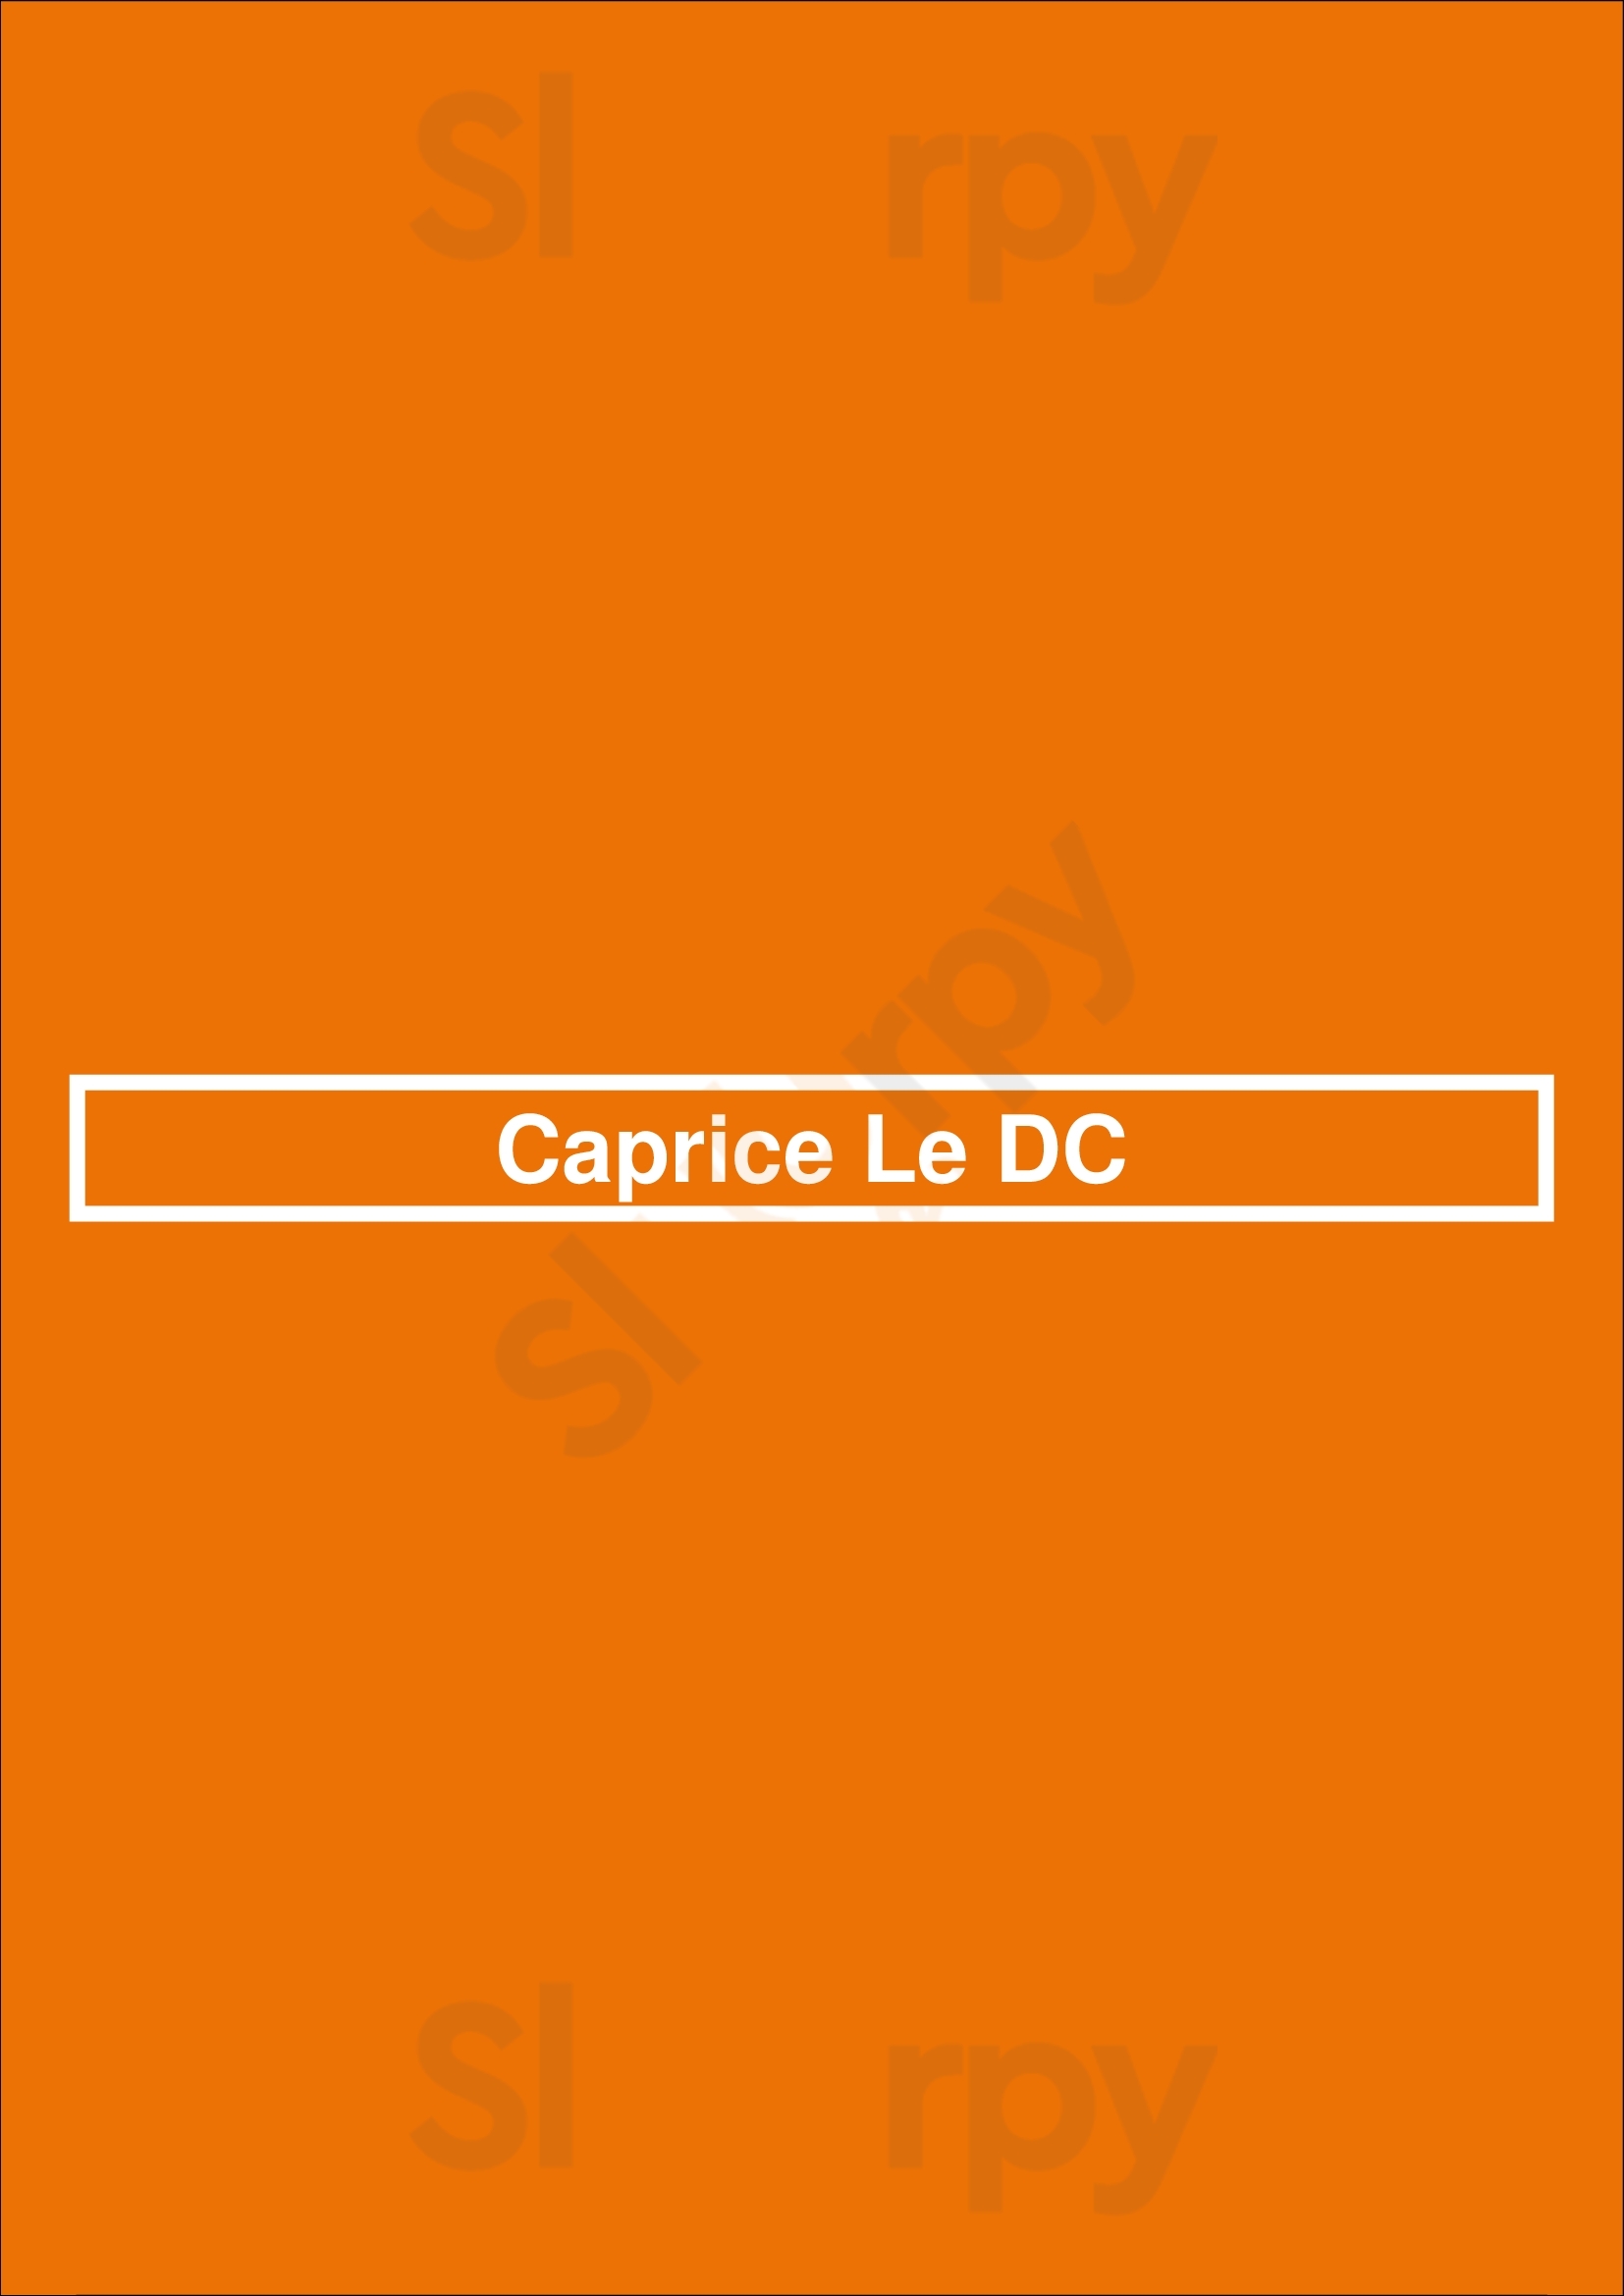 Le Caprice Dc Washington DC Menu - 1